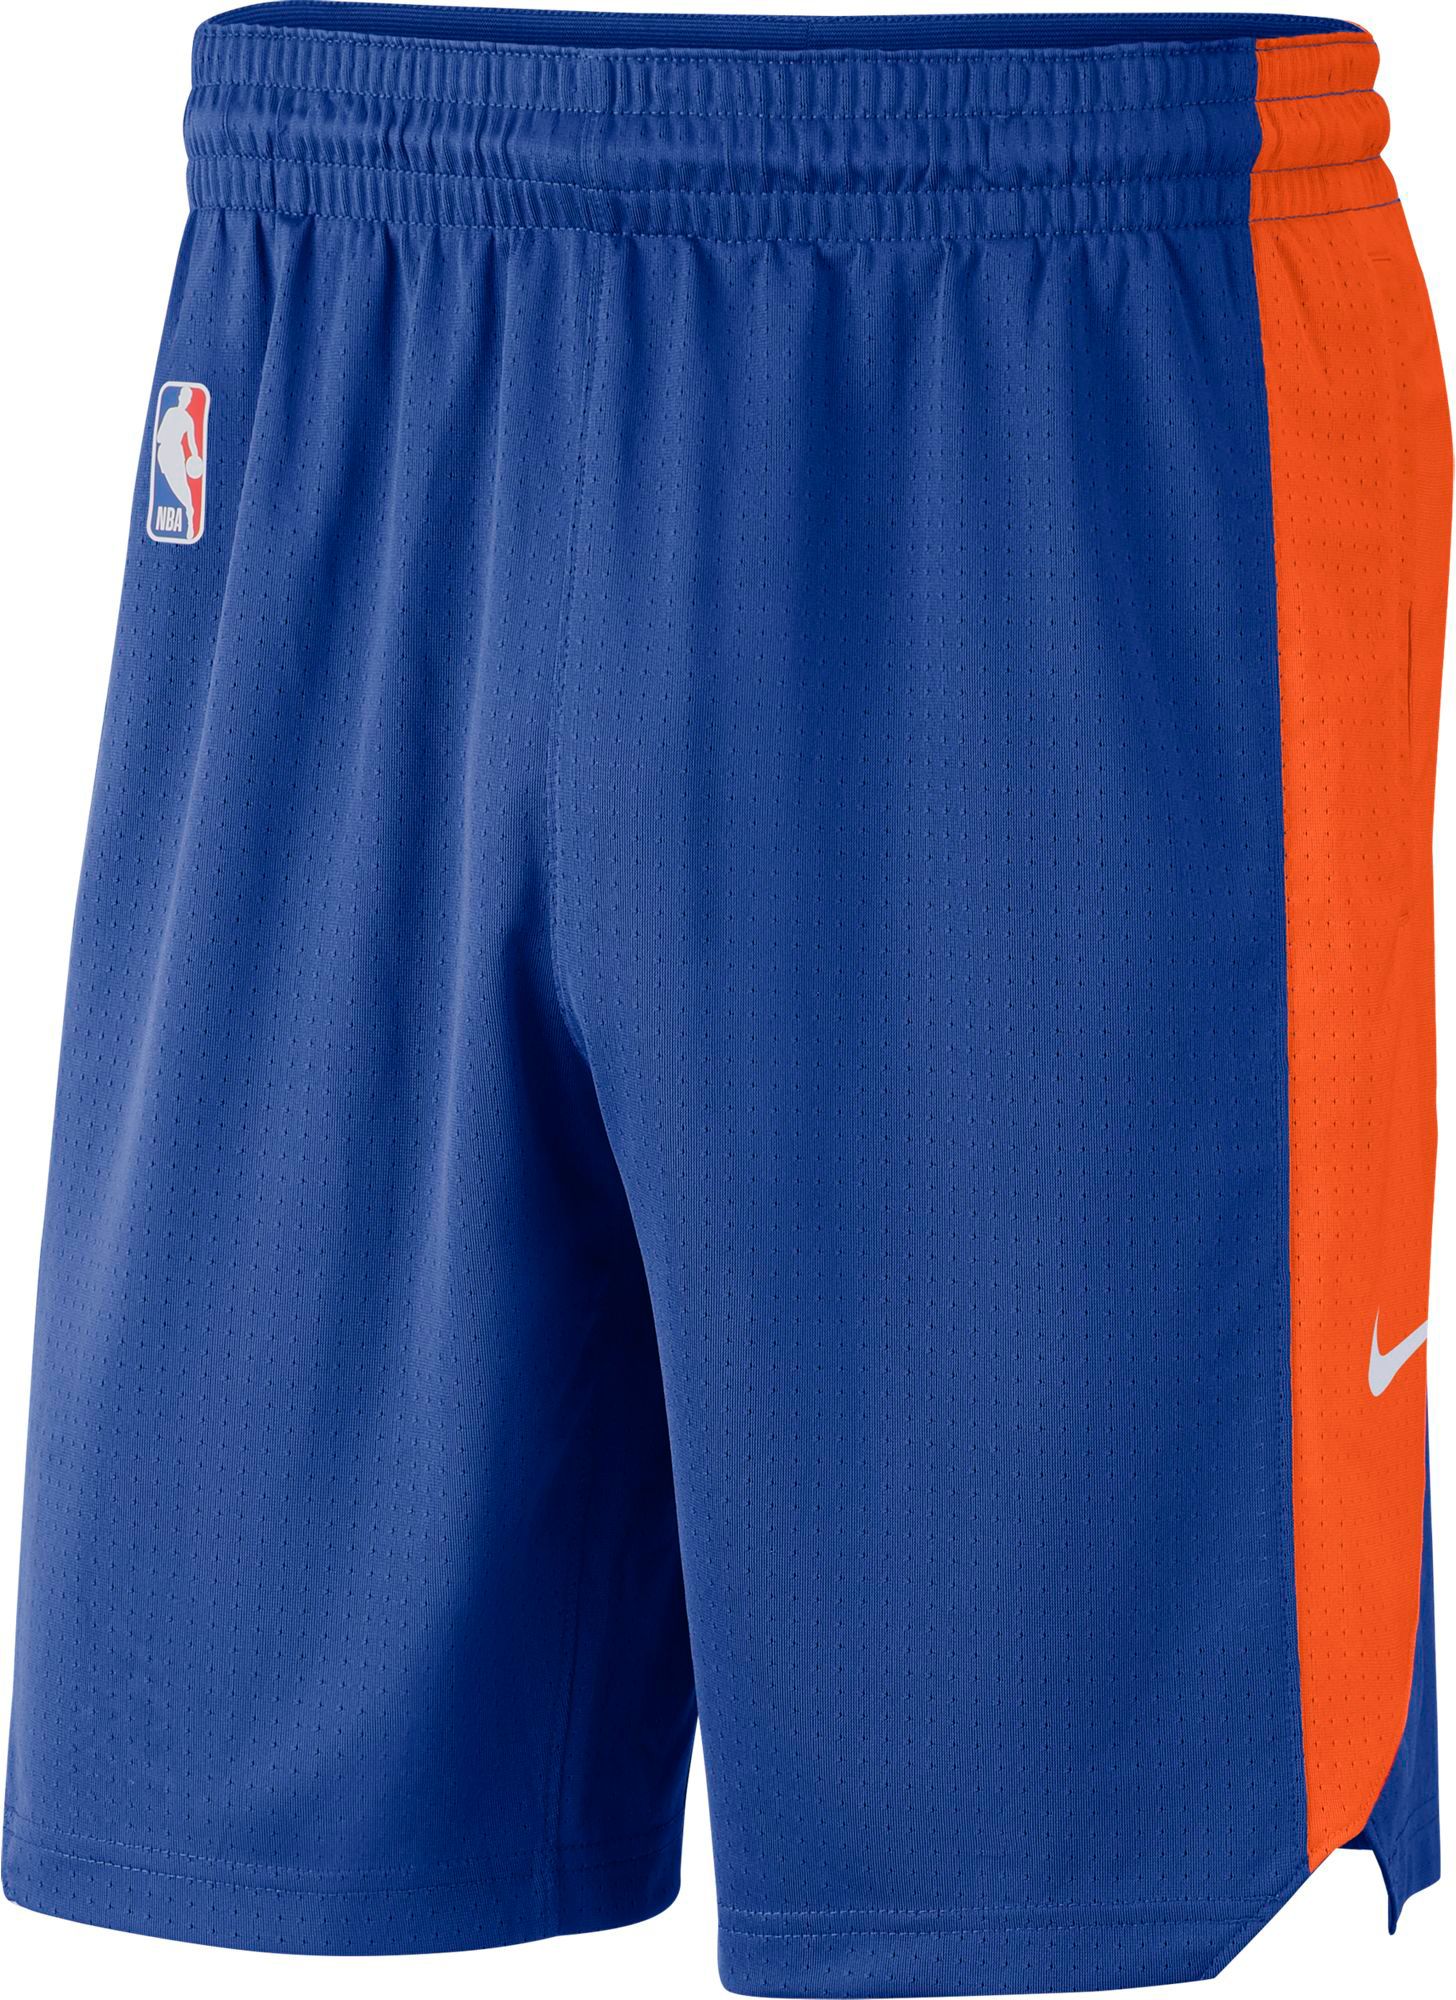 New York Knicks Dri-FIT Practice Shorts 